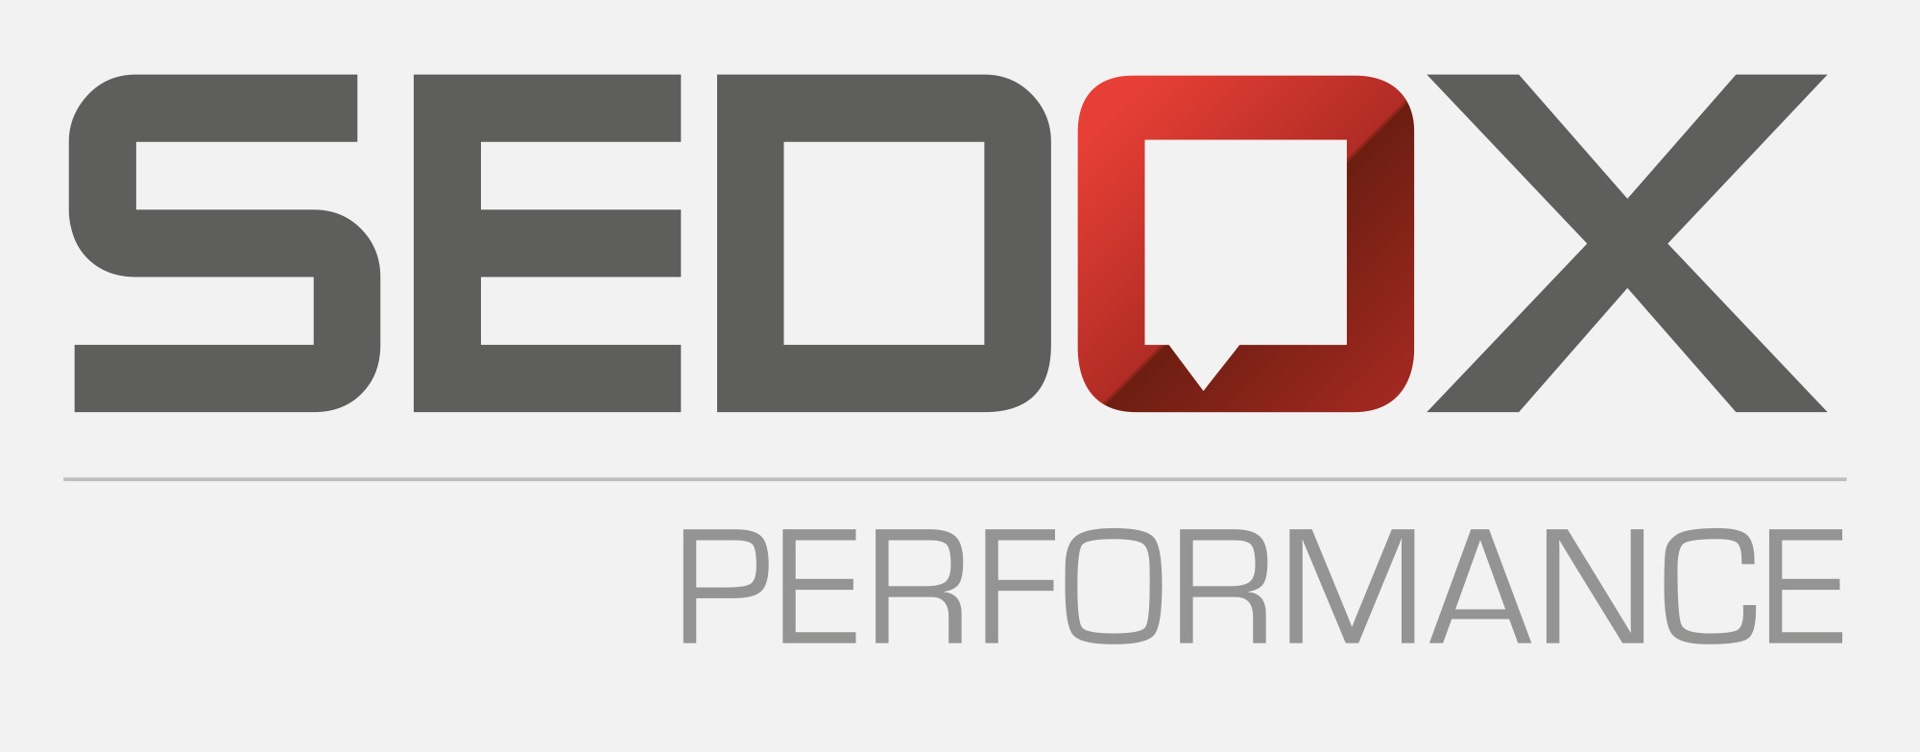 Performance com. Чип тюнинг логотип. Логотип авточип. Фирма Performance. Эмблема Chip Tuning.